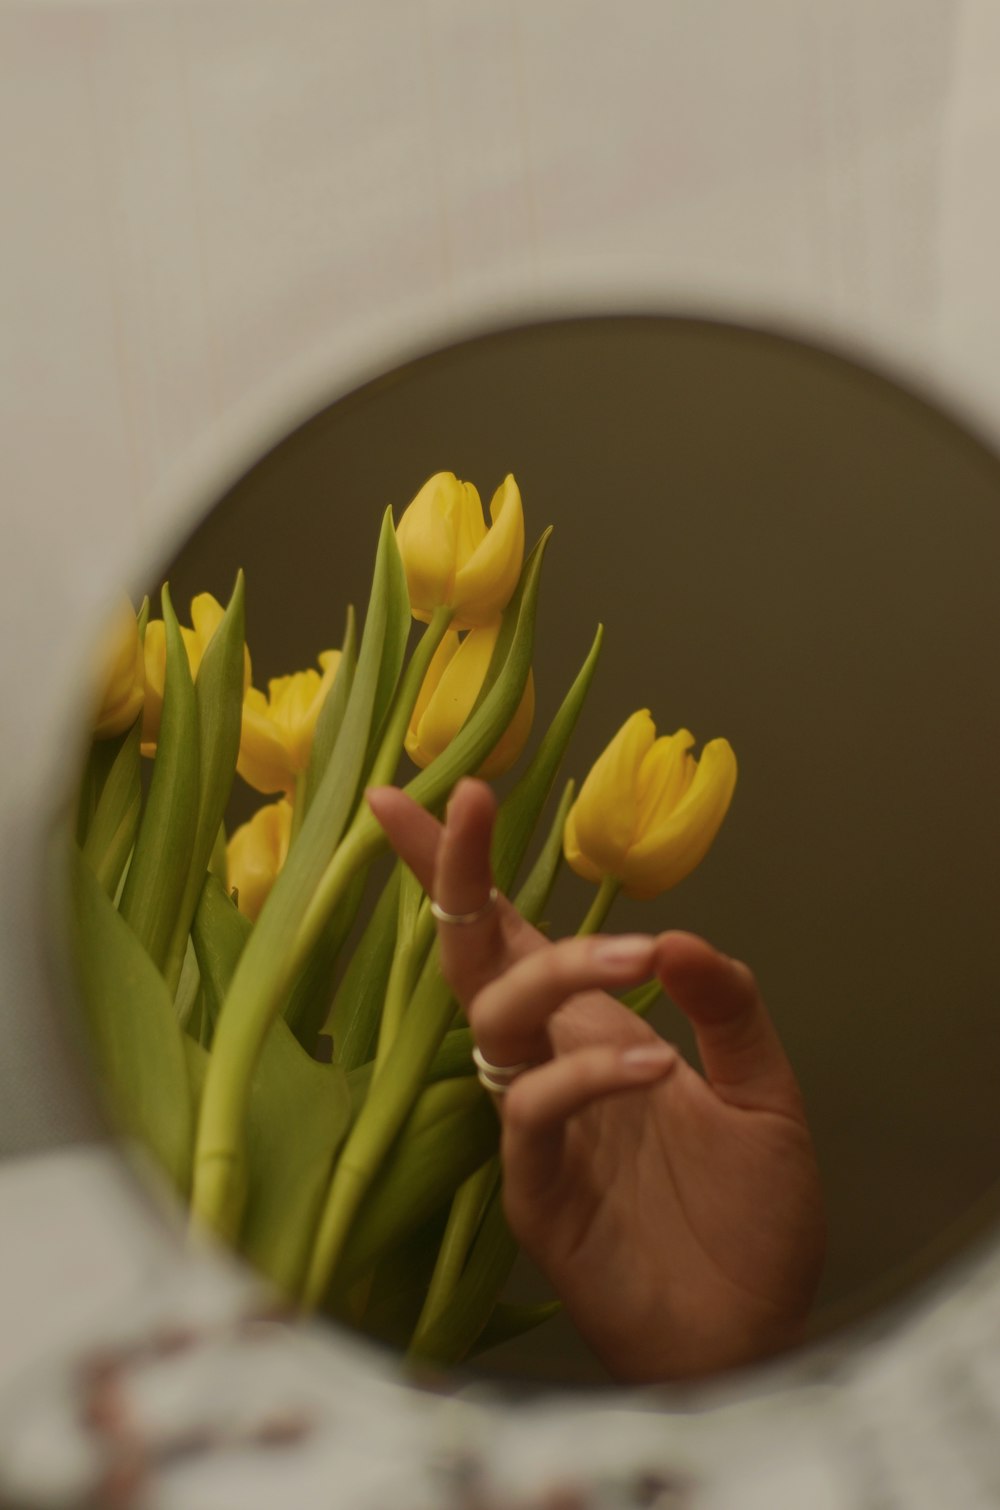 yellow tulips on white table